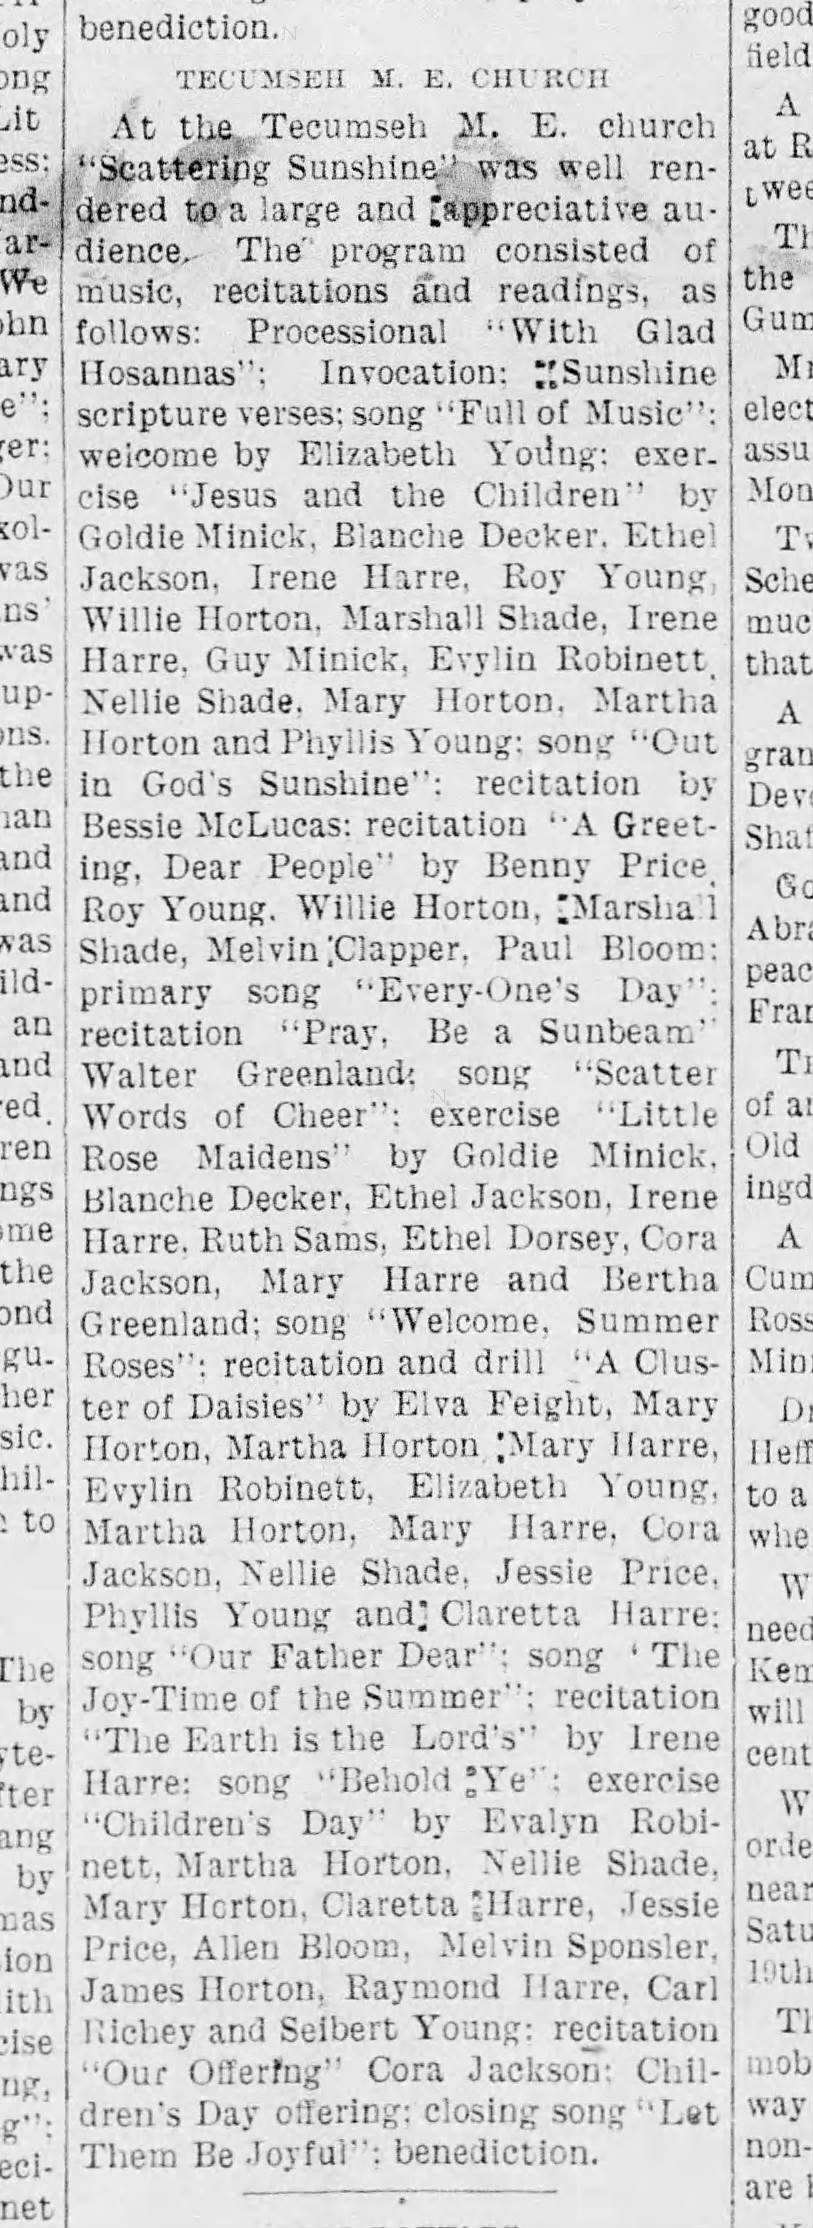 Goldie, Guy Minick perform-Everett Press-18 Jun 1909 p1